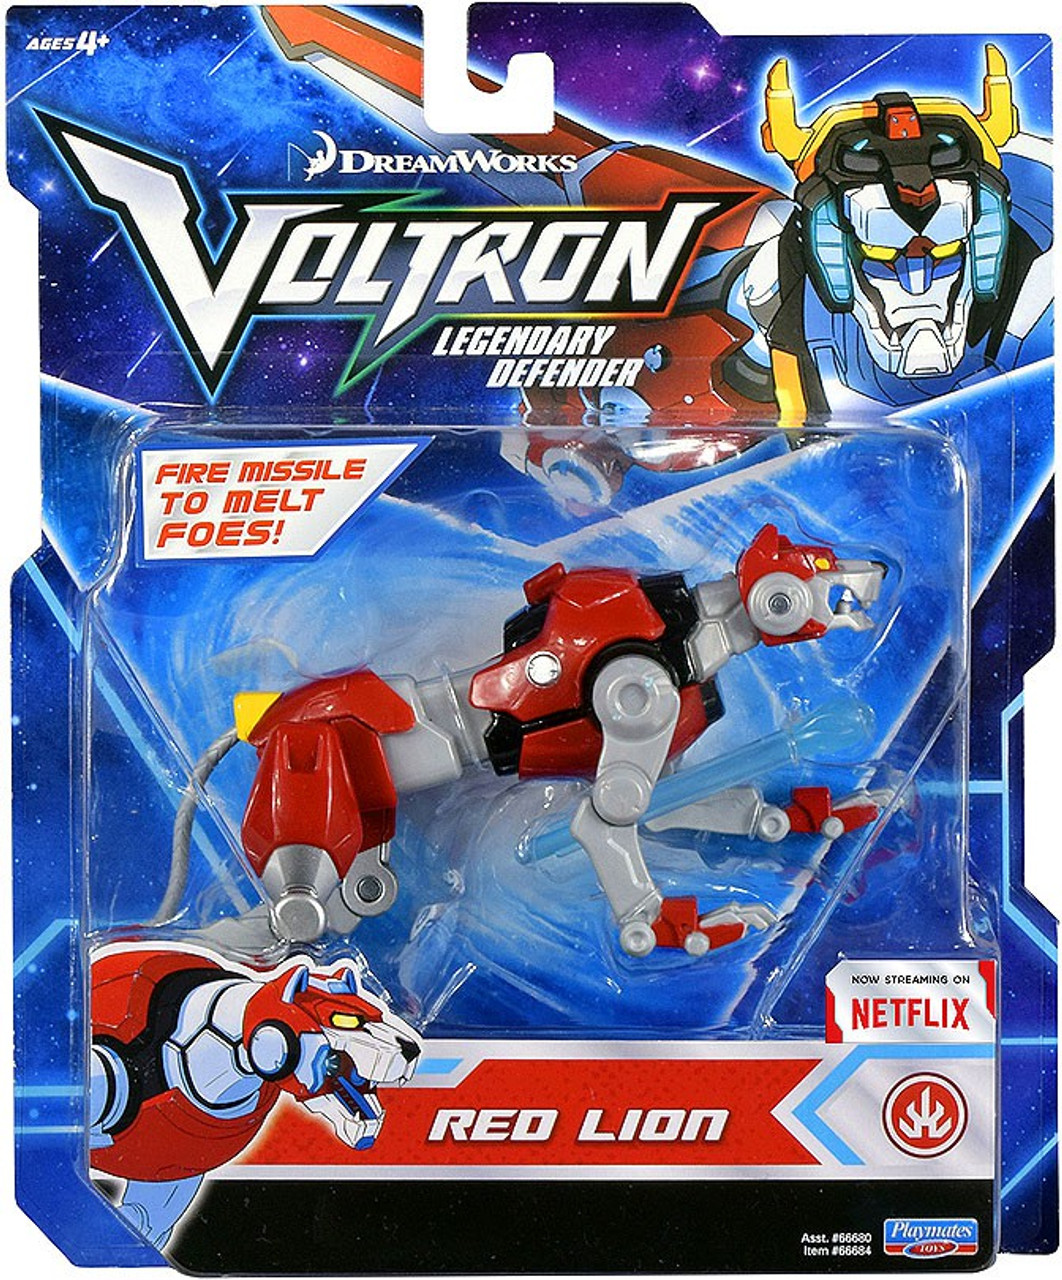 Voltron Legendary Defender Red Lion 5 Basic Action Figure Playmates Toywiz - voltron legendary defender roblox